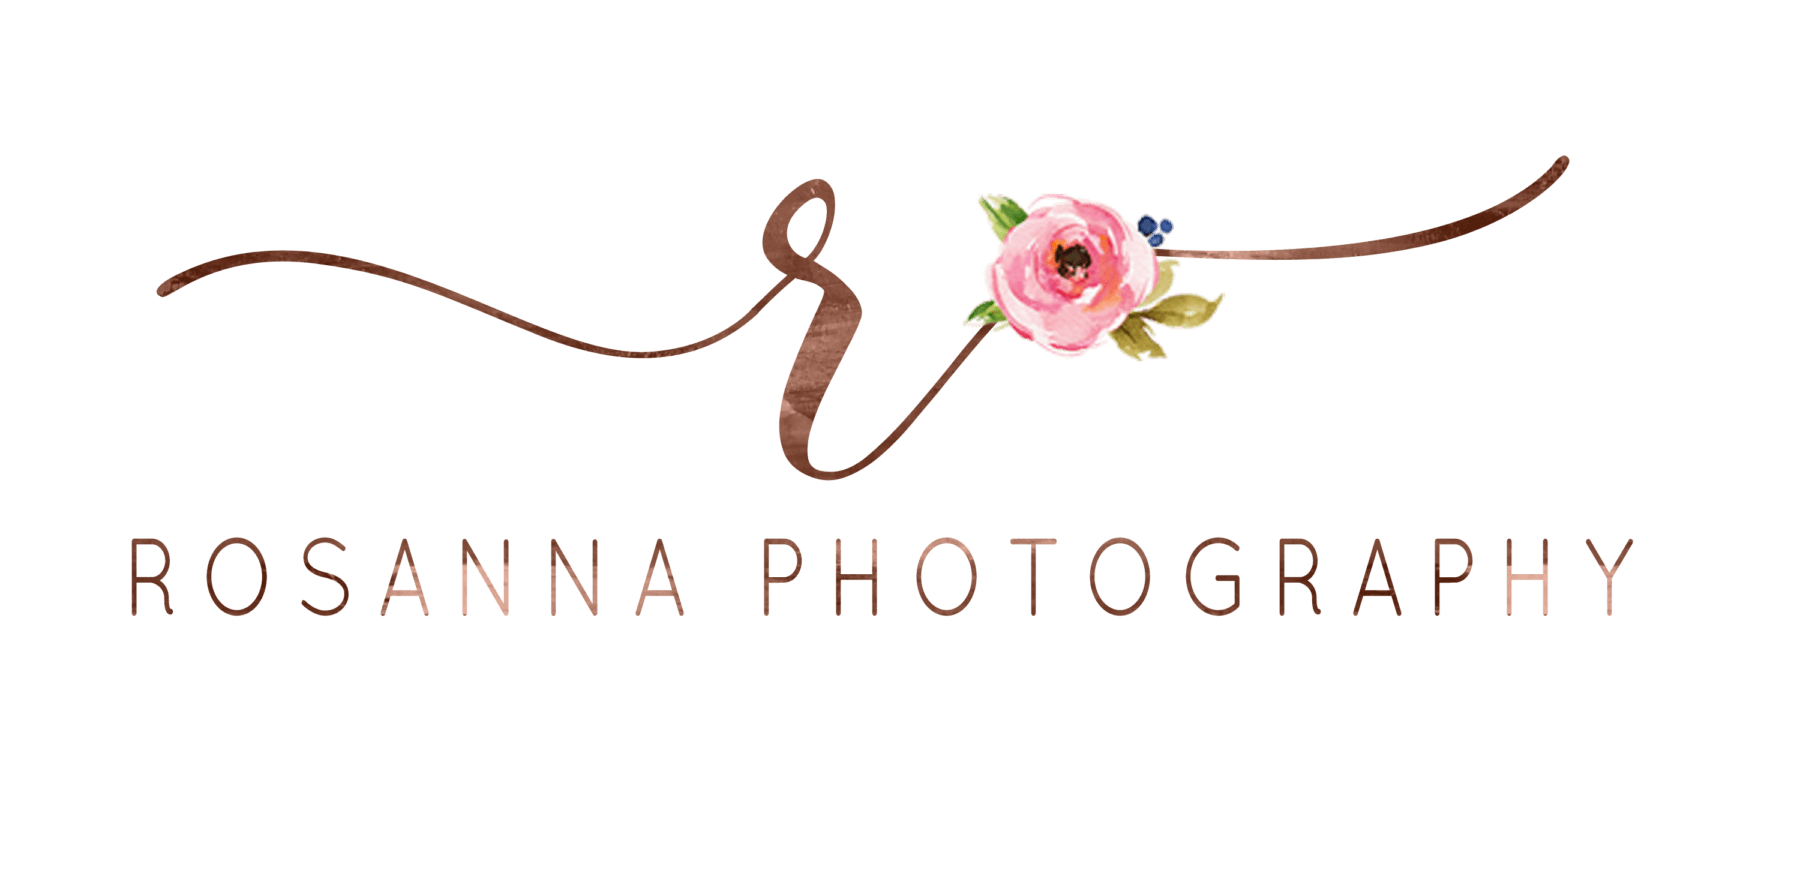 Rosanna Photography image